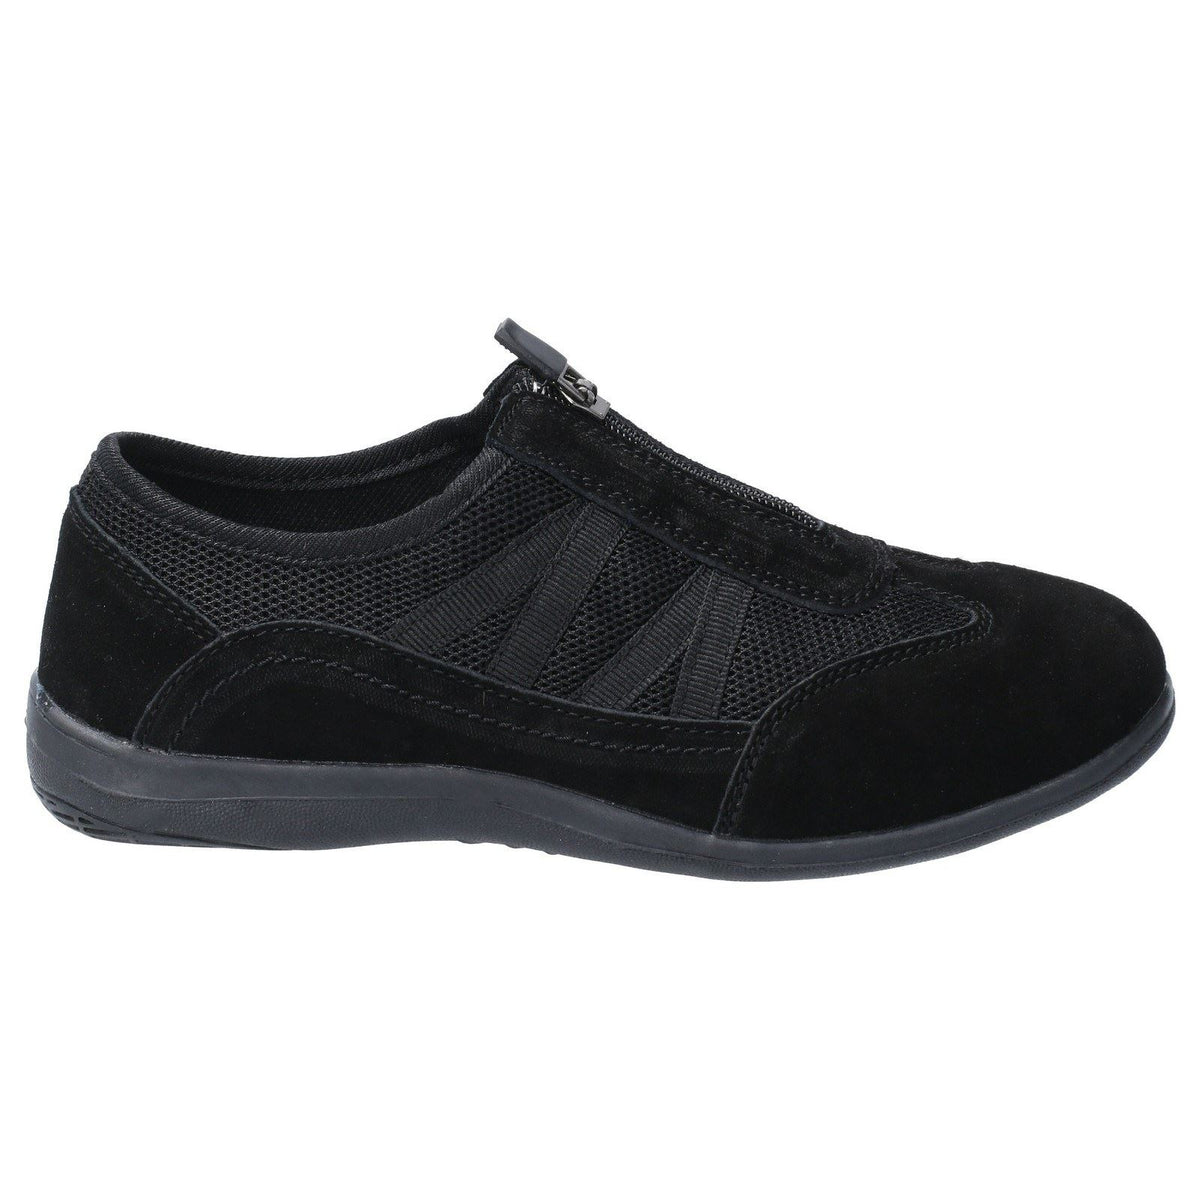 Fleet & Foster Mombassa Comfort Shoes